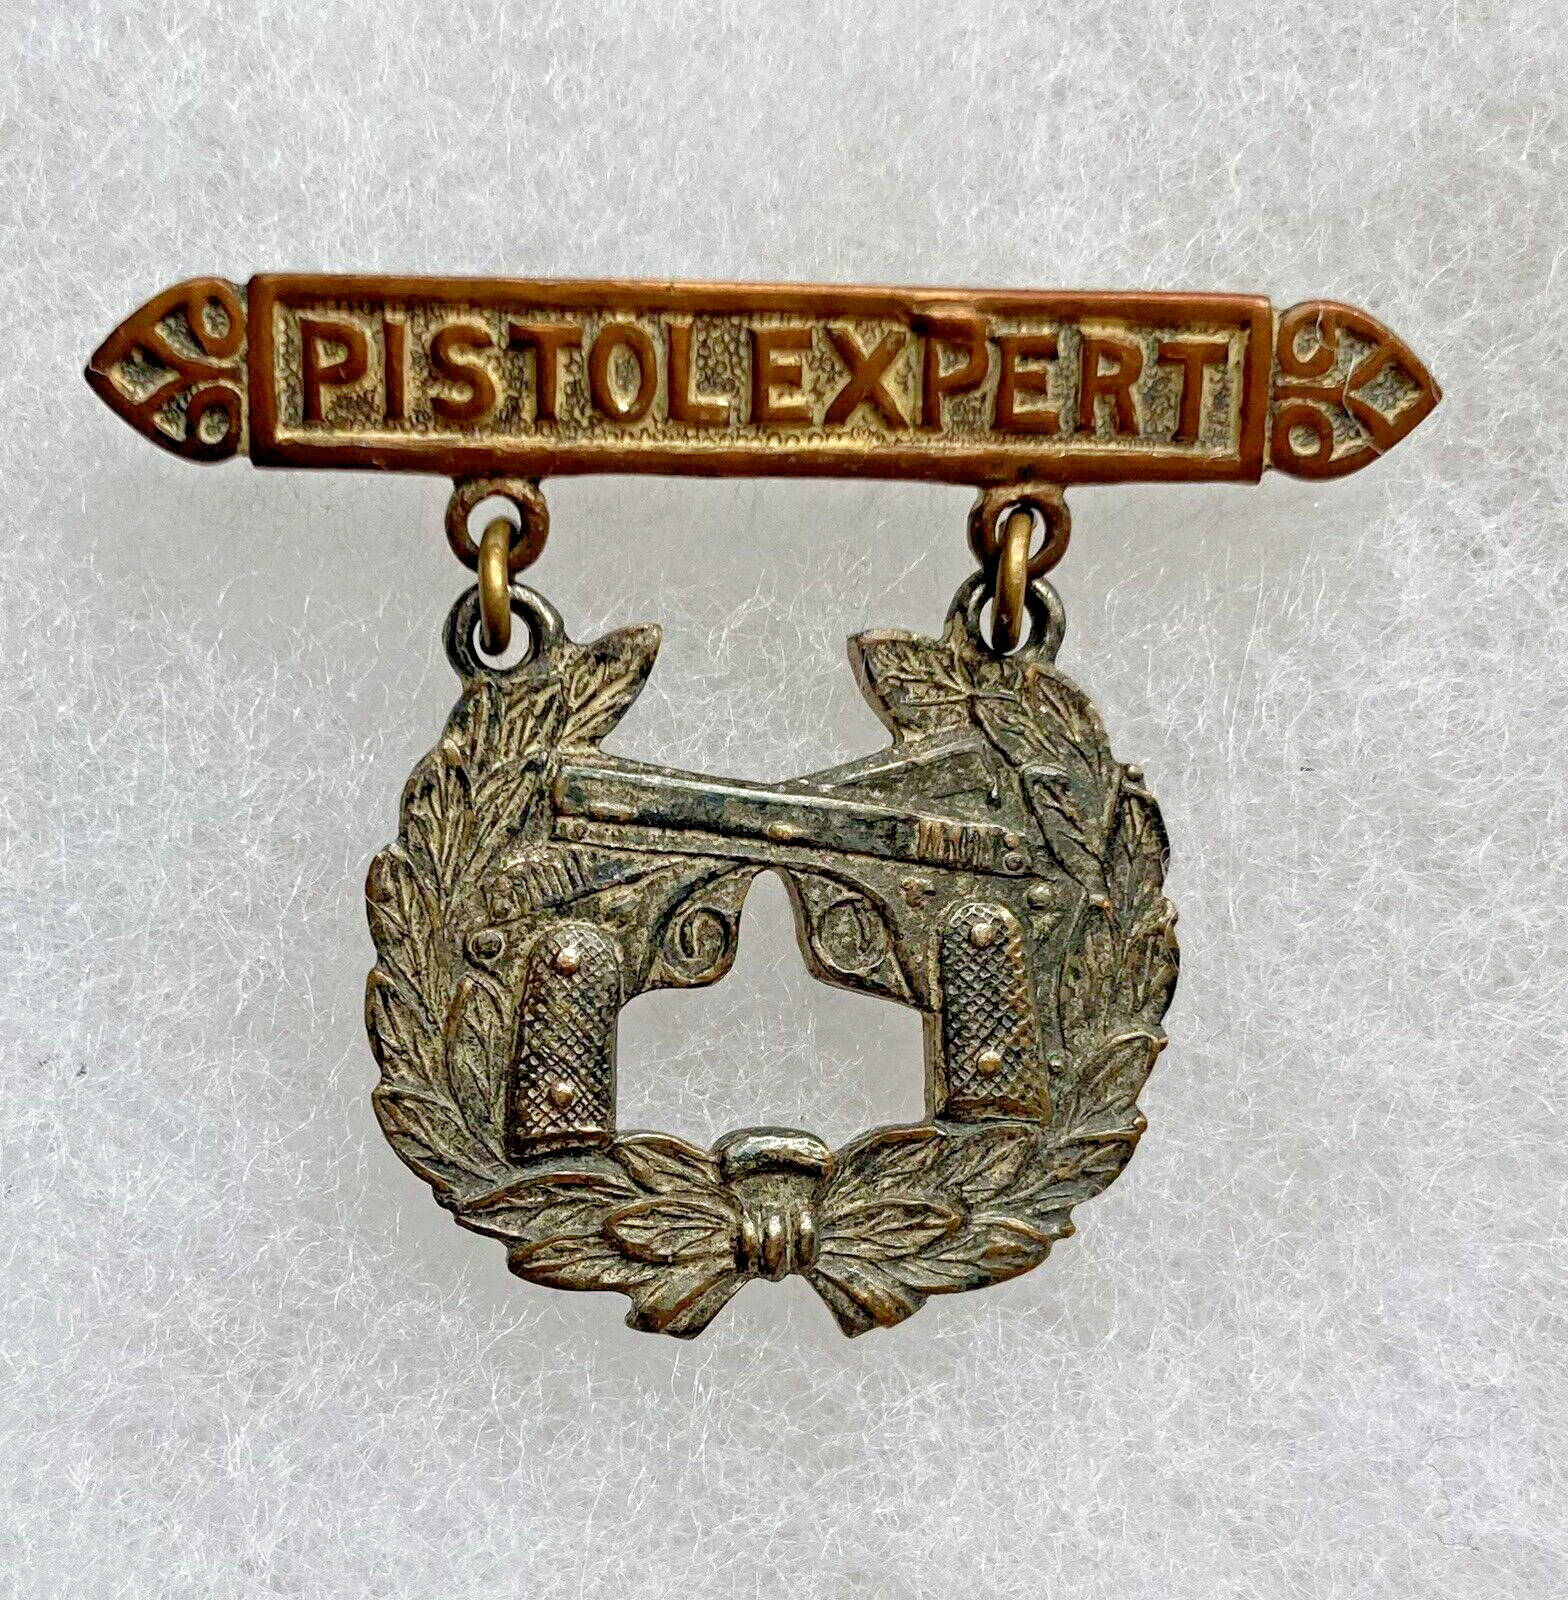 USMC Pistol Expert Badge (pb nhm)